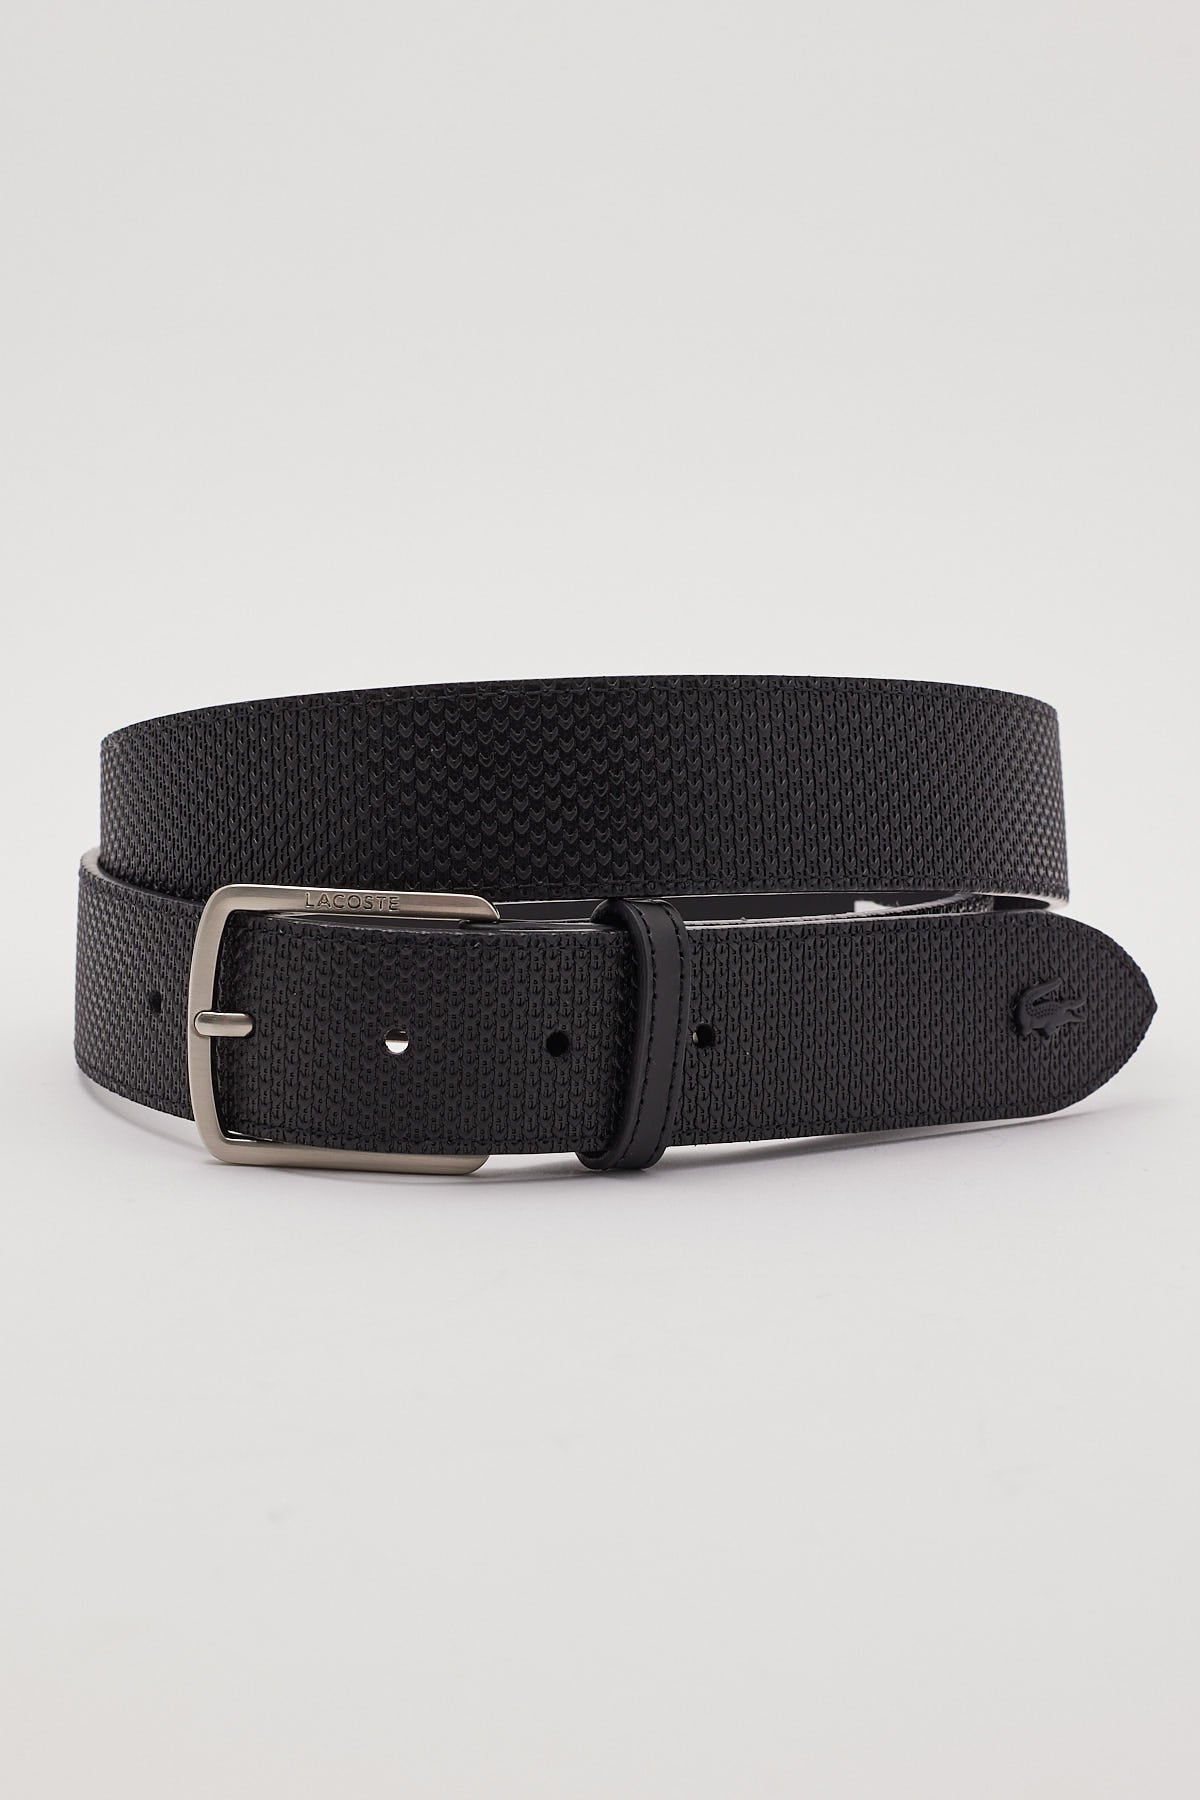 Lacoste Chantaco Mens 35mm Belt Black